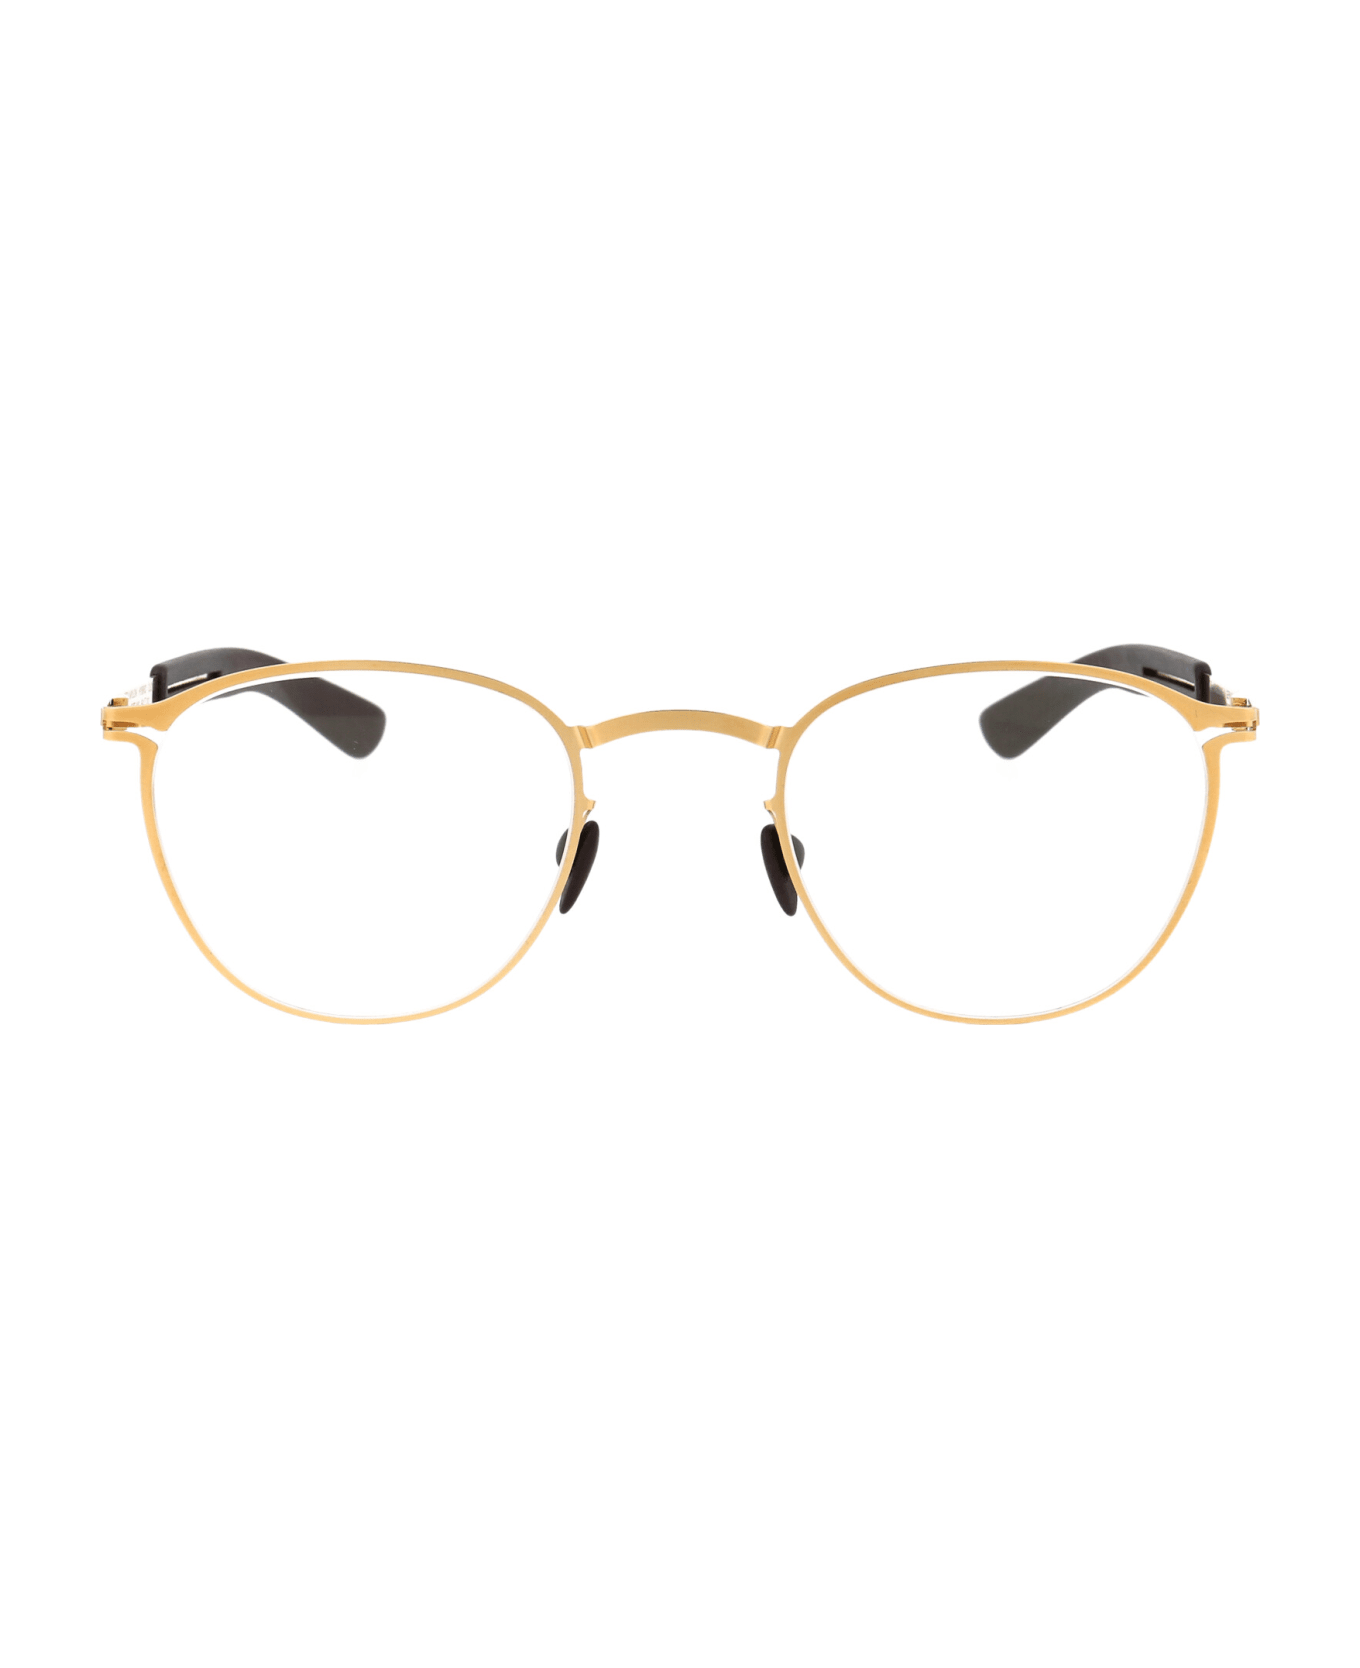 Mykita Clove Glasses - 244 MH2 Gold/Ebony Brown Clear